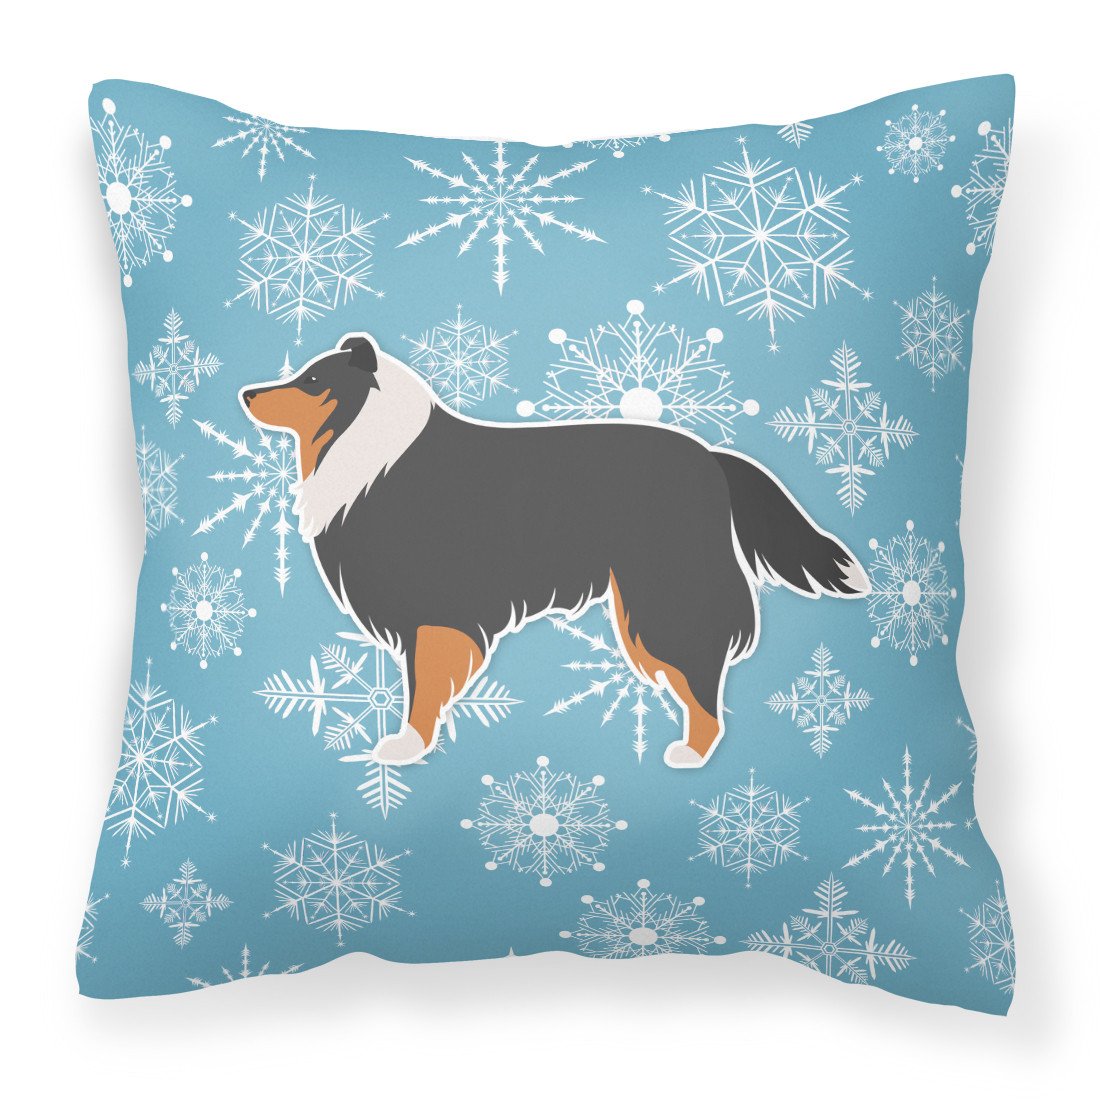 Winter Snowflake Sheltie/Shetland Sheepdog Fabric Decorative Pillow BB3530PW1818 by Caroline's Treasures